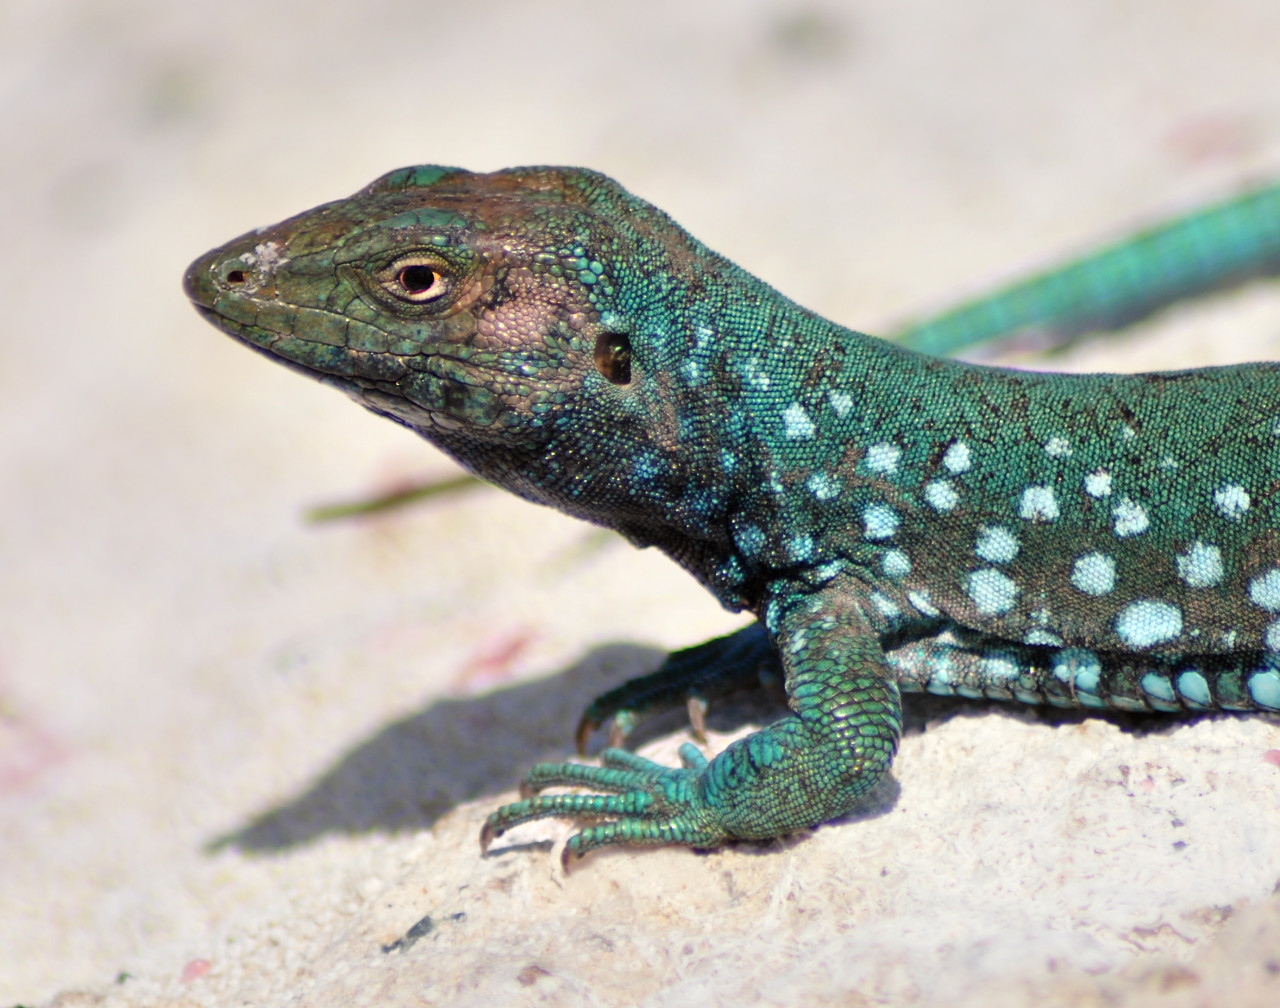 tropic-havens:
“Aruban Whiptail lizard (Cnemidophorus arubensis) - Aruba
”